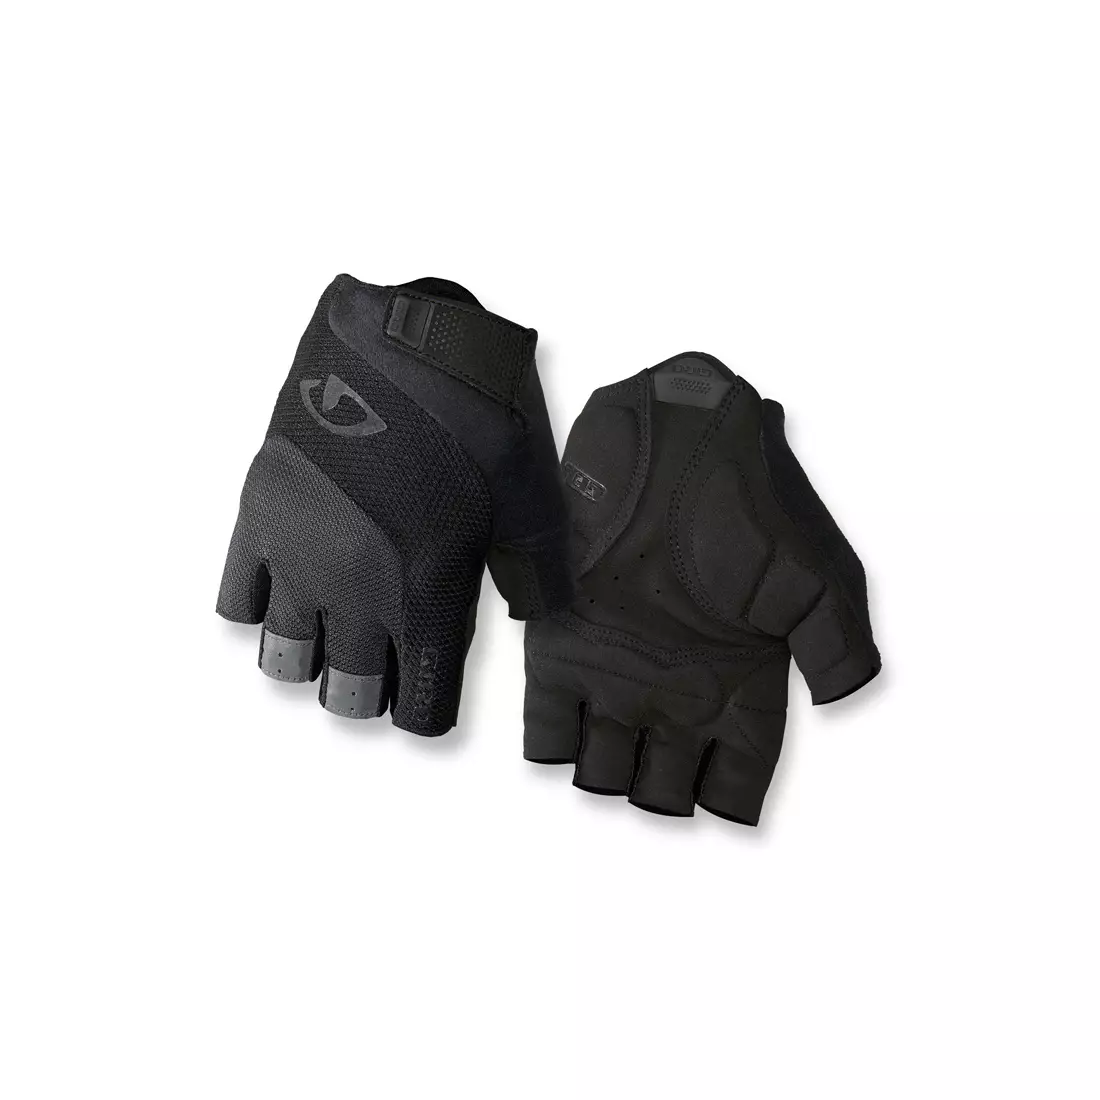 GIRO BRAVO GEL black cycling gloves